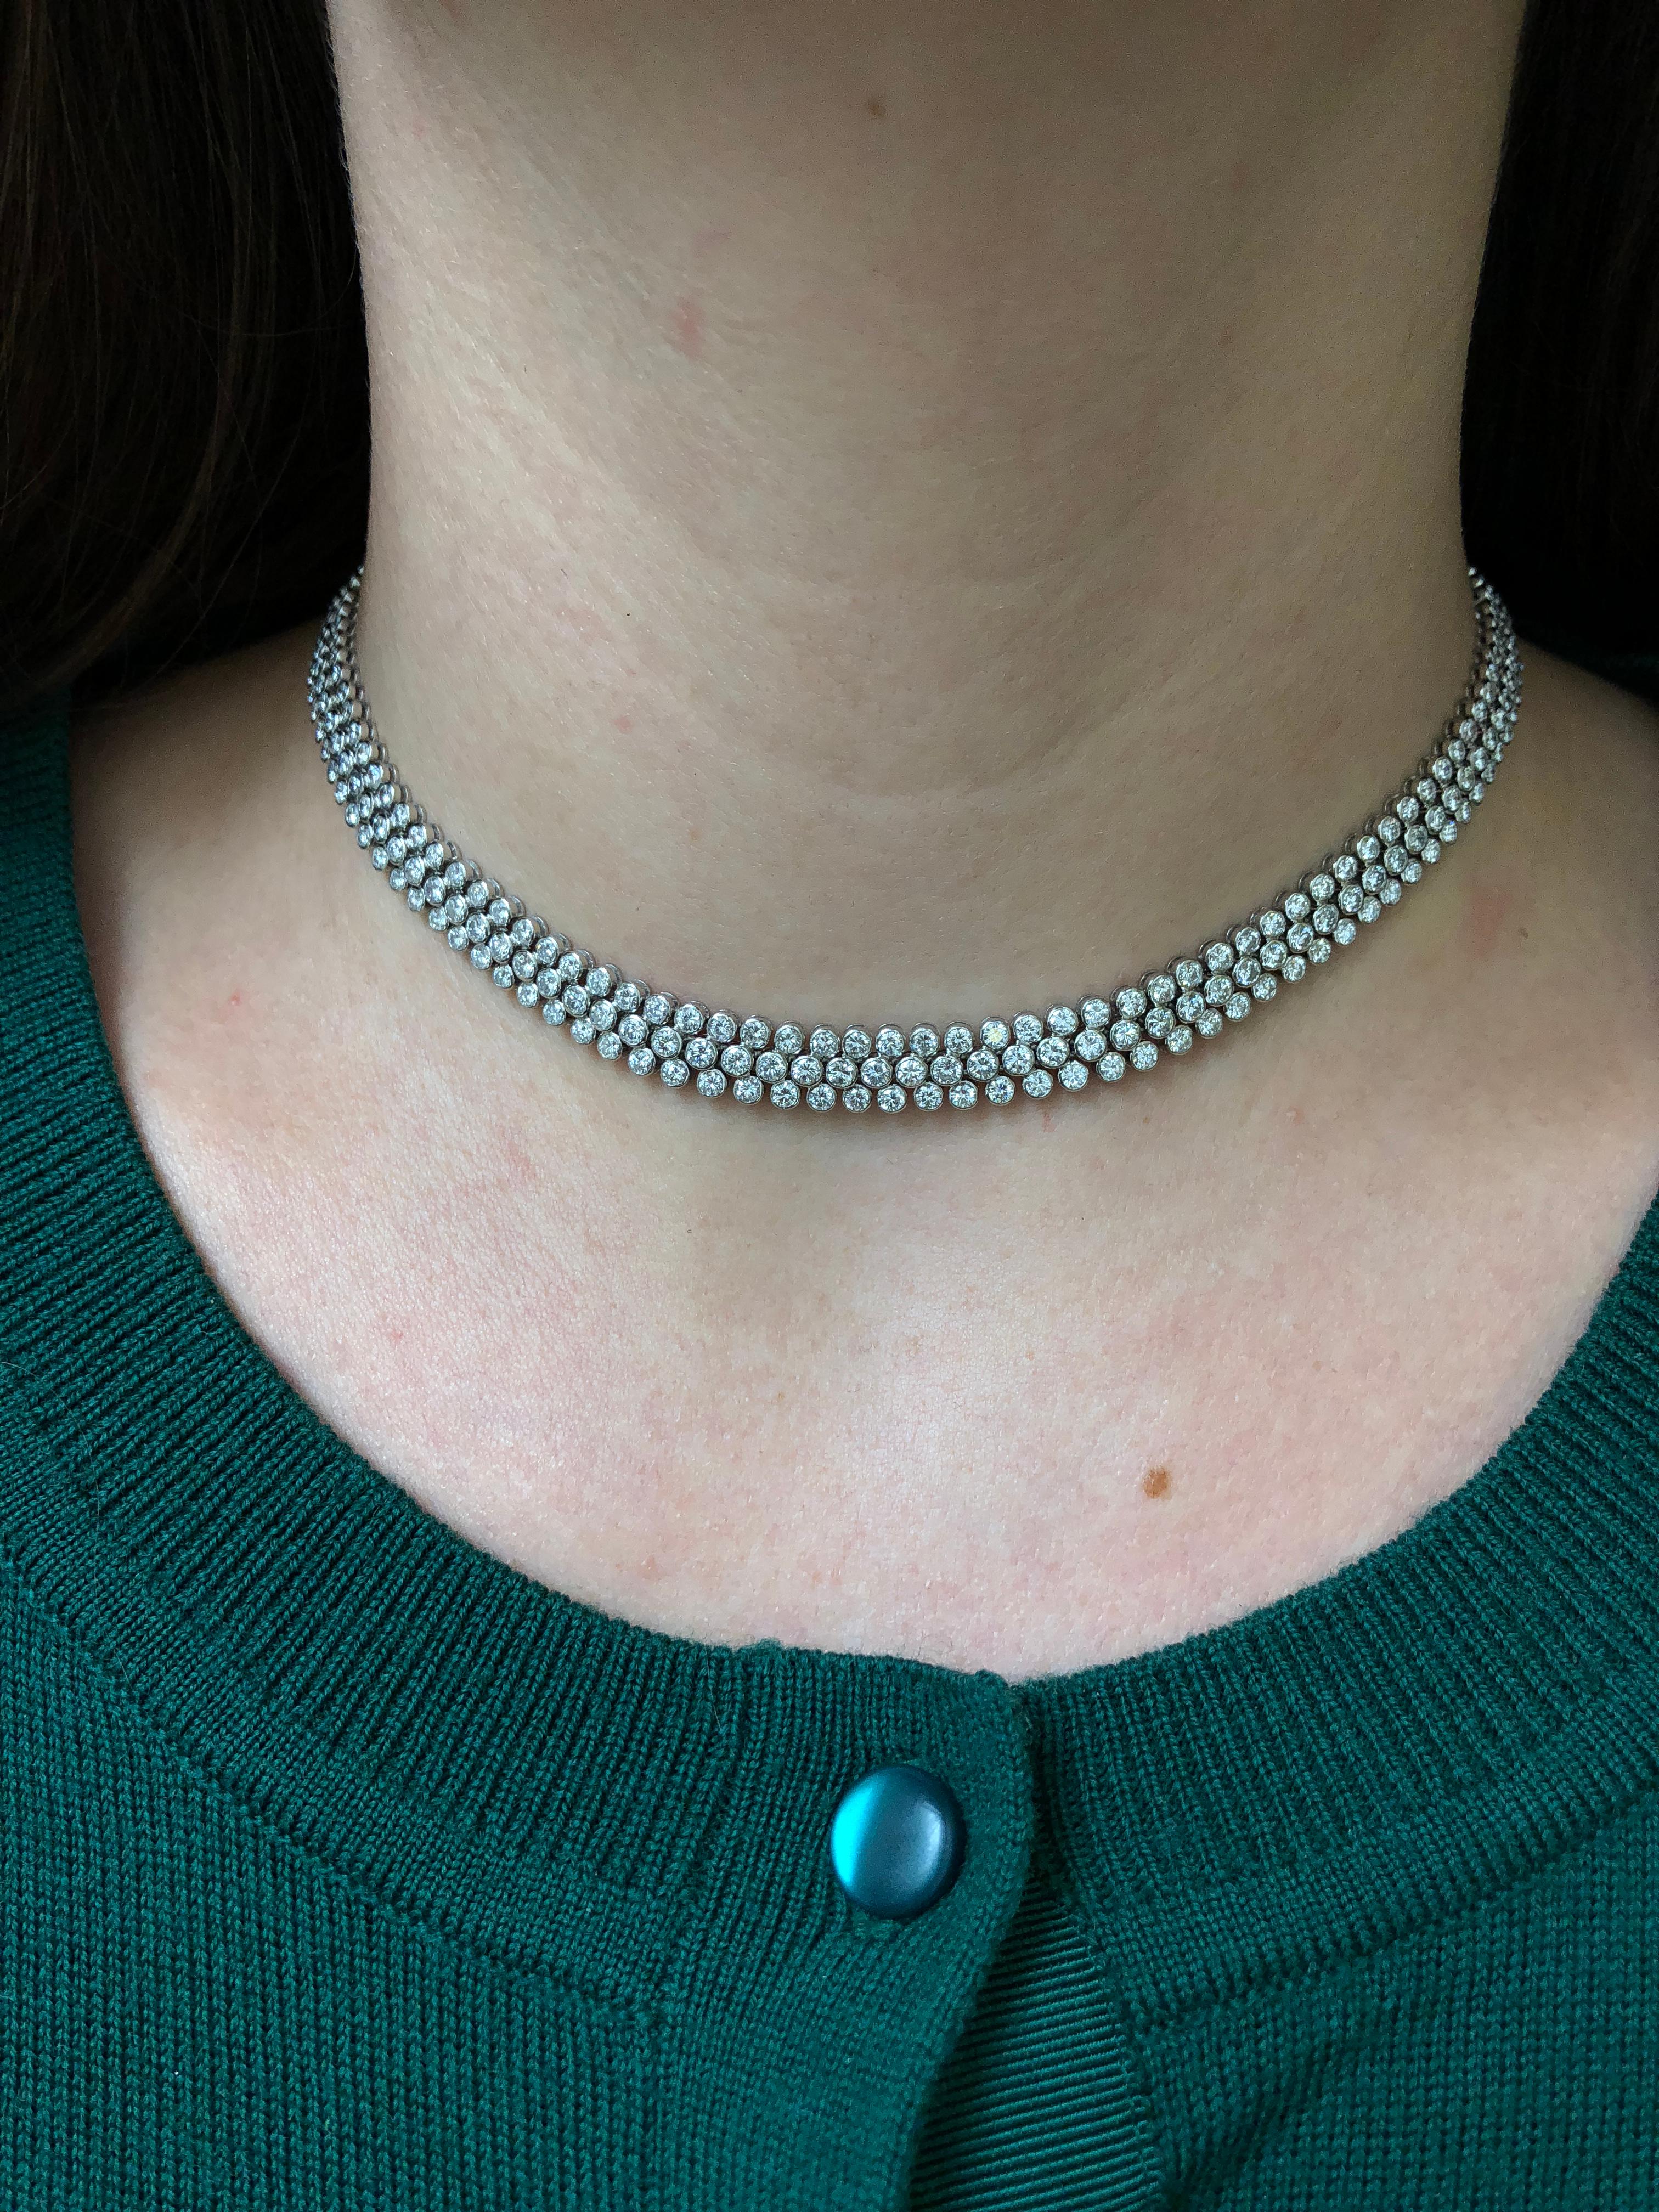 platnium necklace